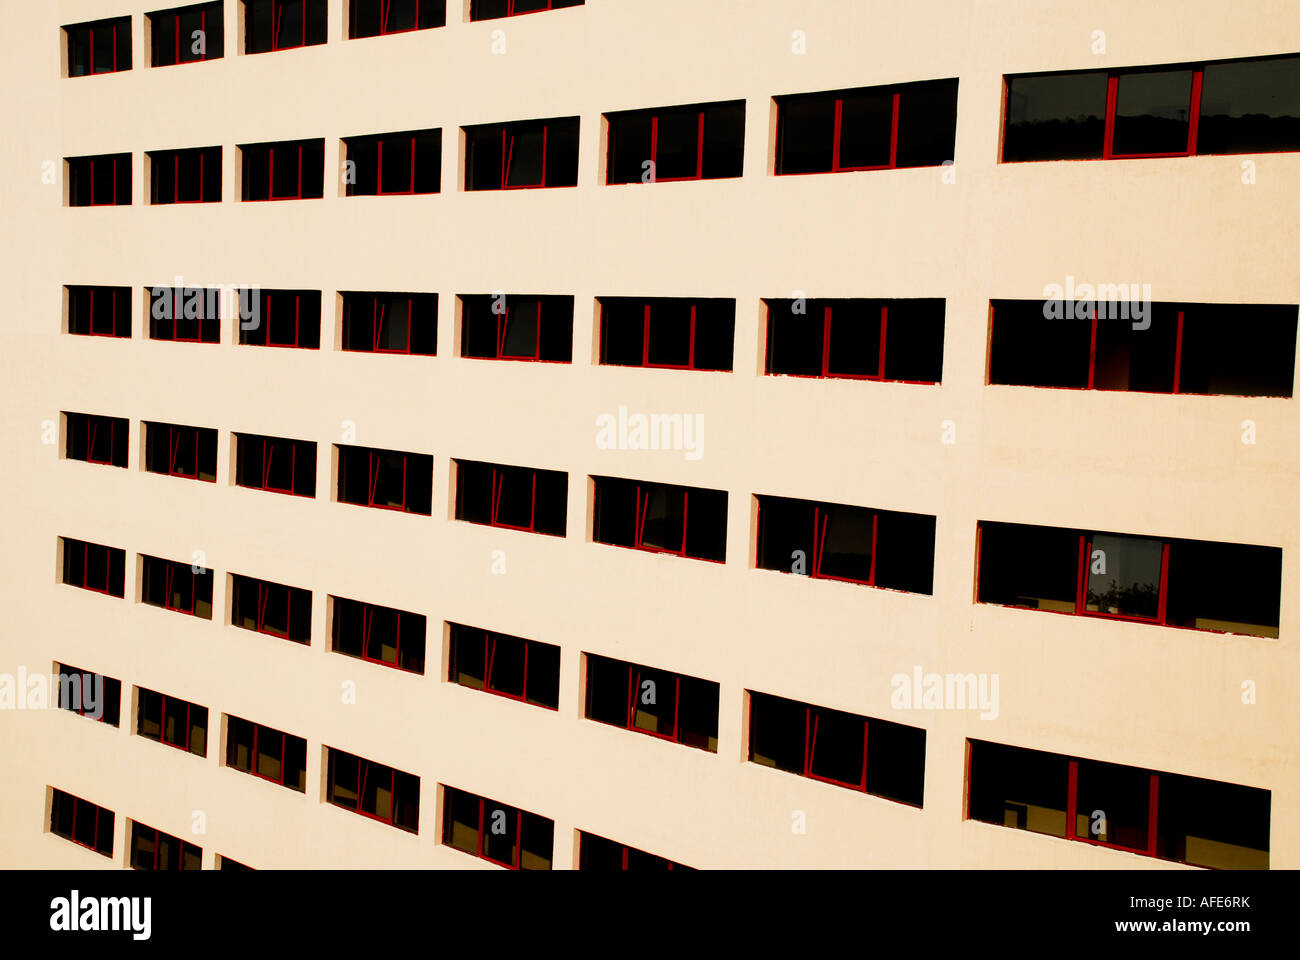 Hotel architecture of simple blocks Stock Photo